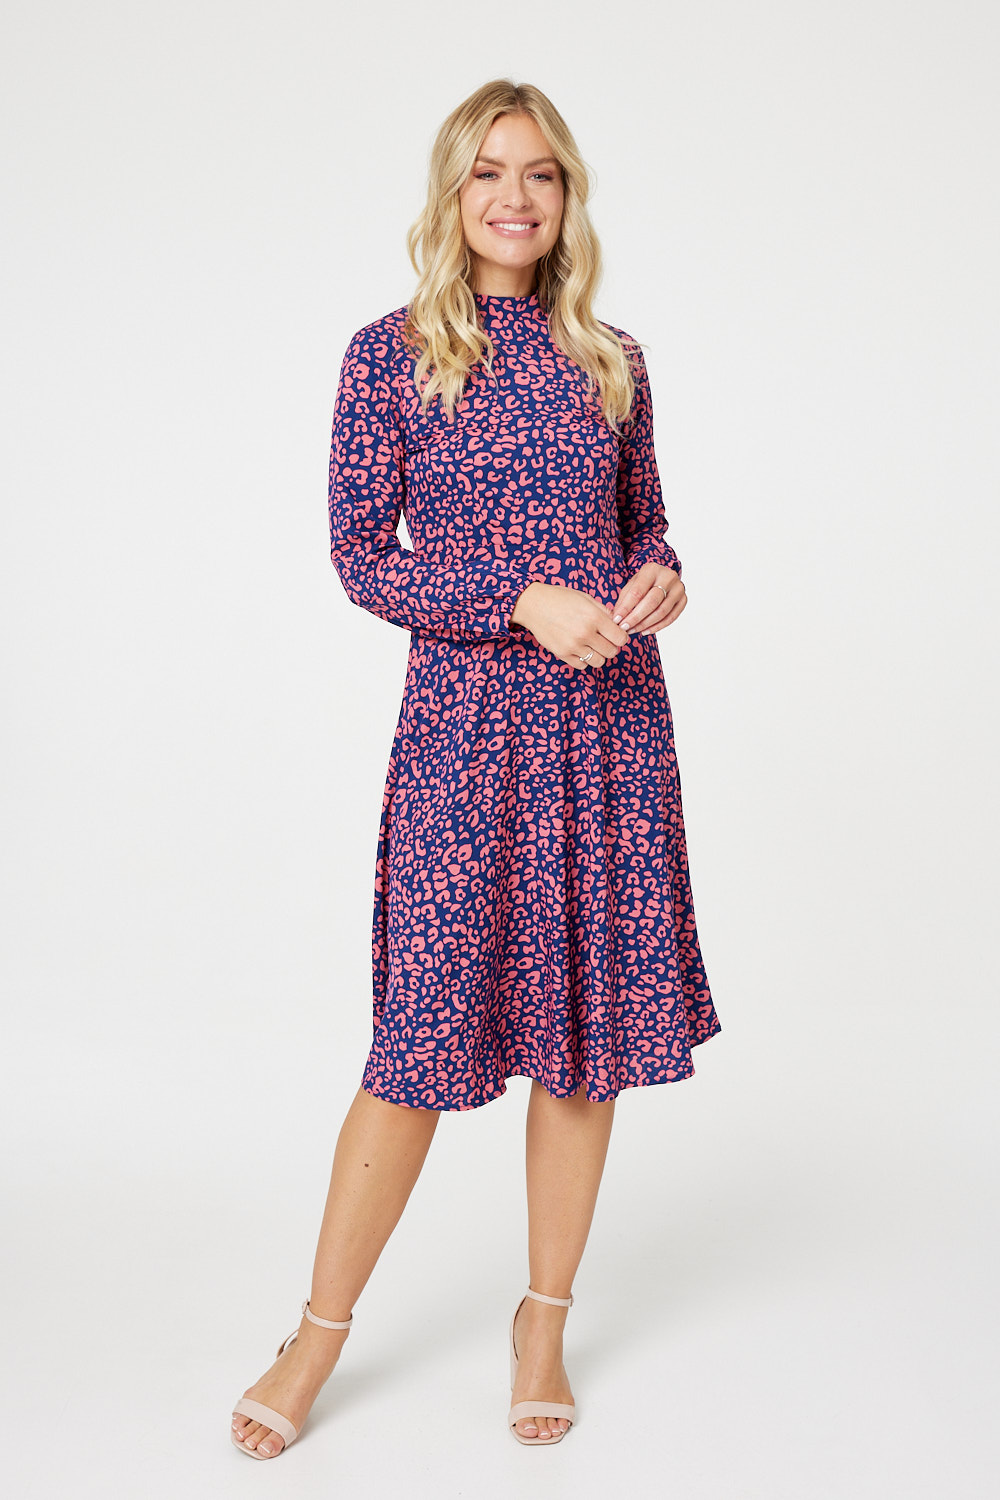 Leopard Print High Neck Tea Dress | Izabel London